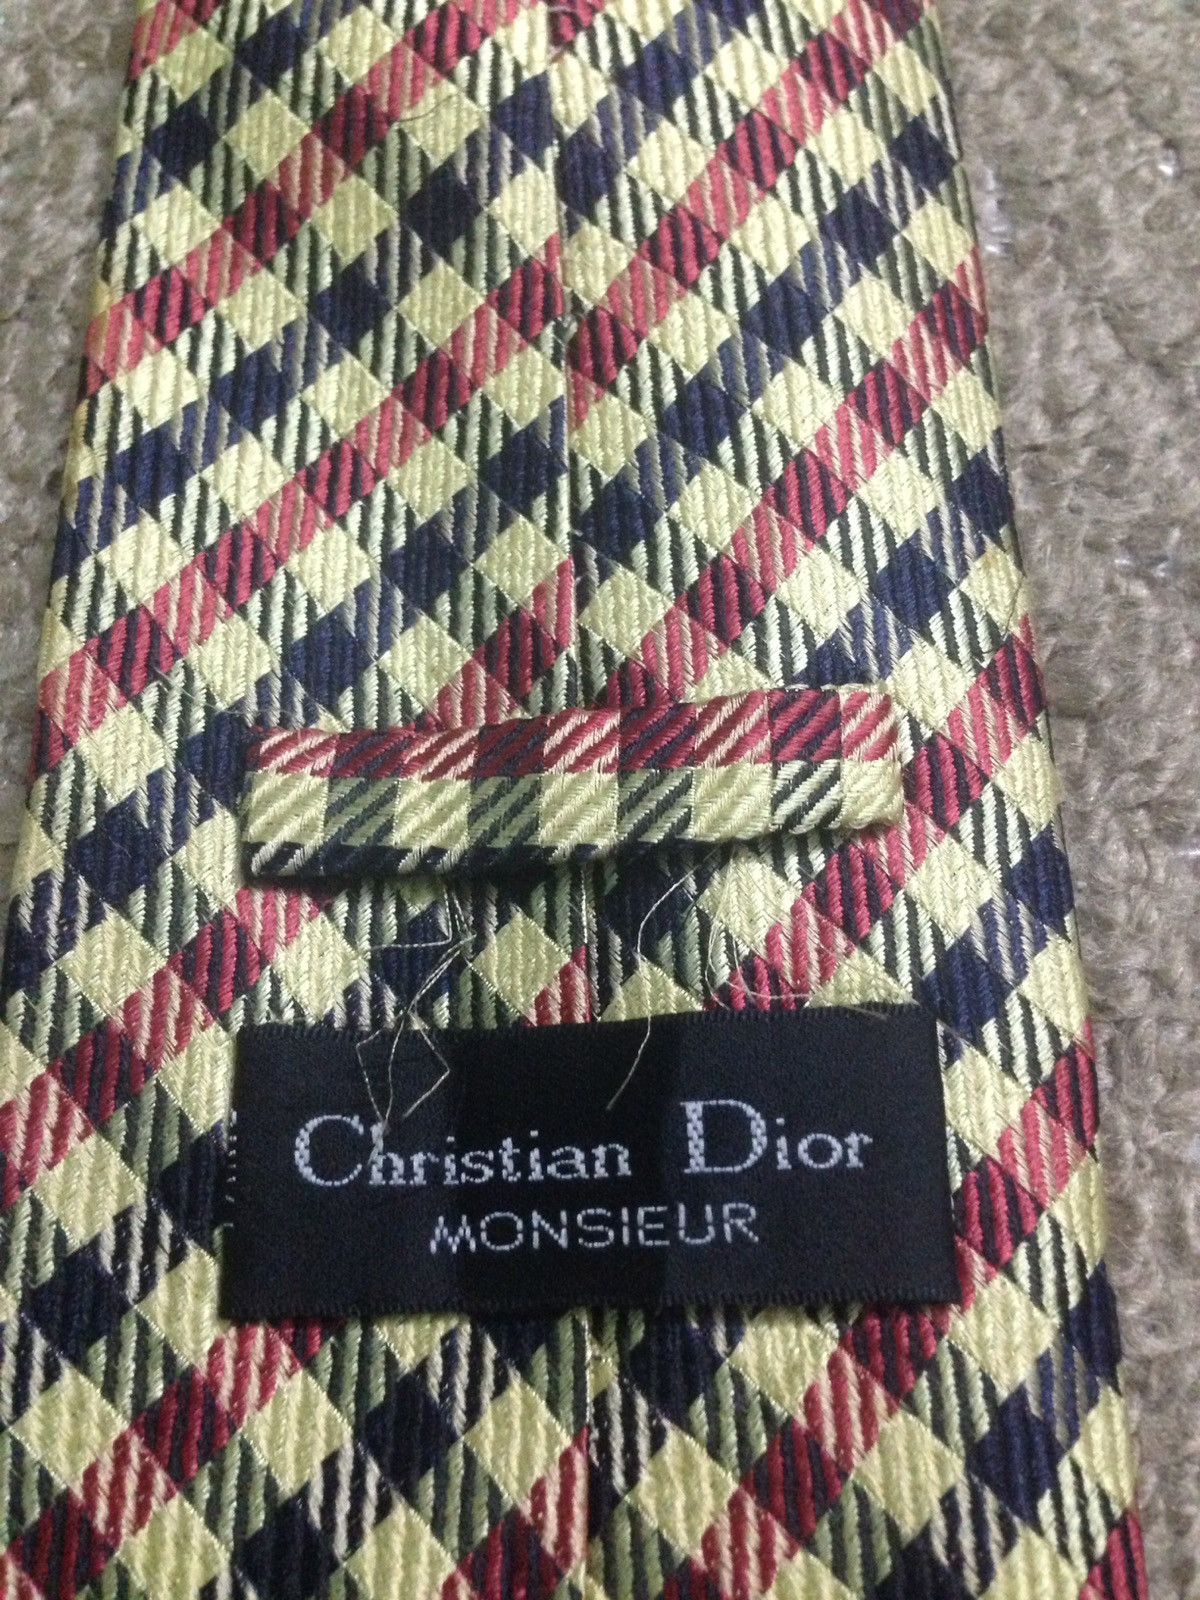 Christian Dior Monsieur - Christian Dior Silk Tie - 3